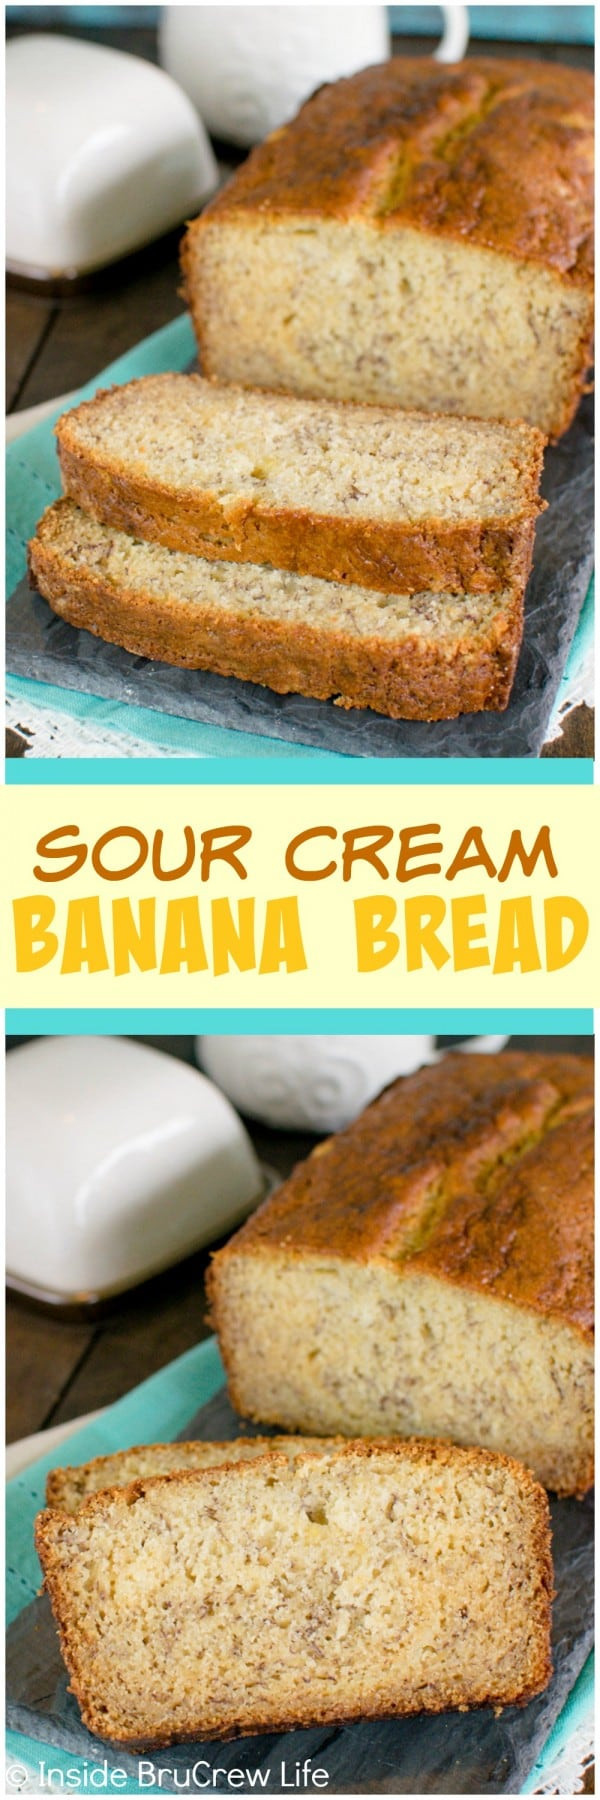 Banana Bread Recipe With Sour Cream
 Sour Cream Banana Bread Inside BruCrew Life